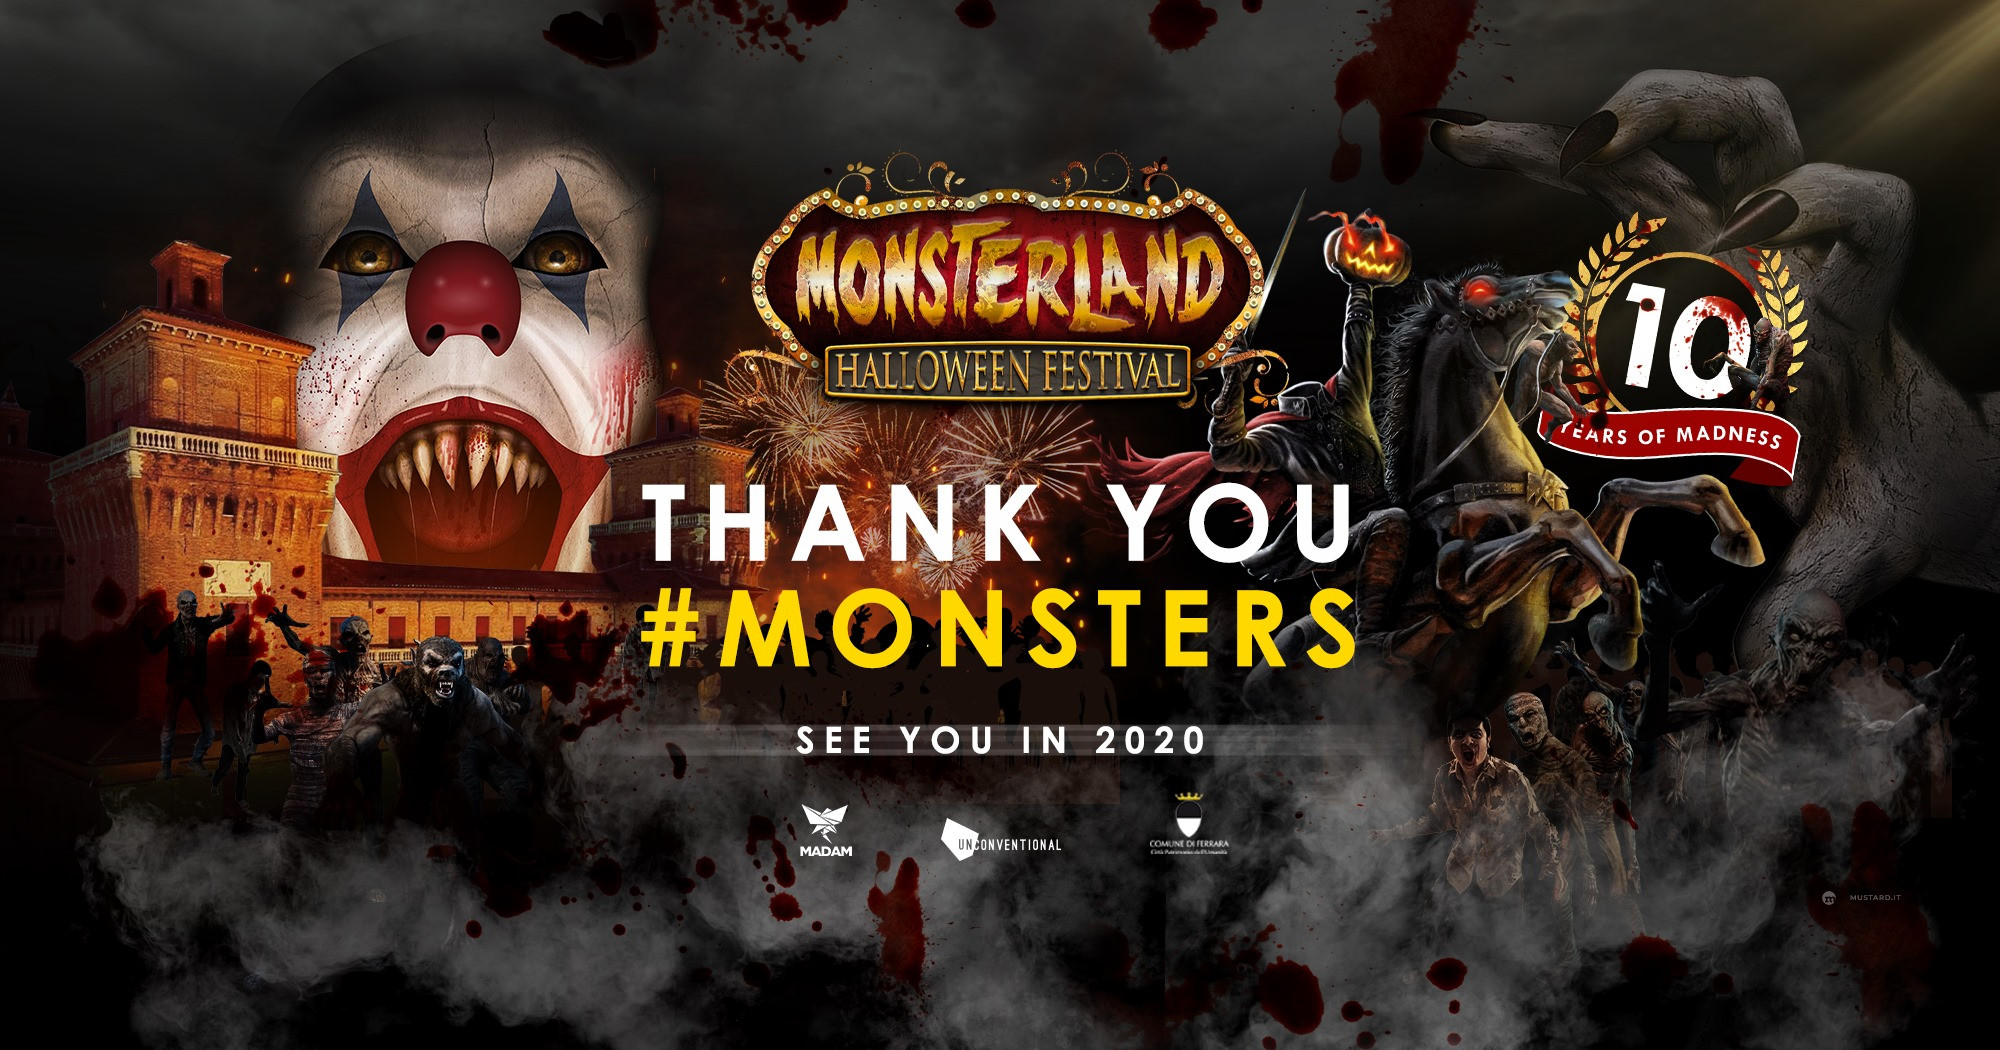 Halloween Activities Near Me 2020
 Monsterland Halloween Festival 2020